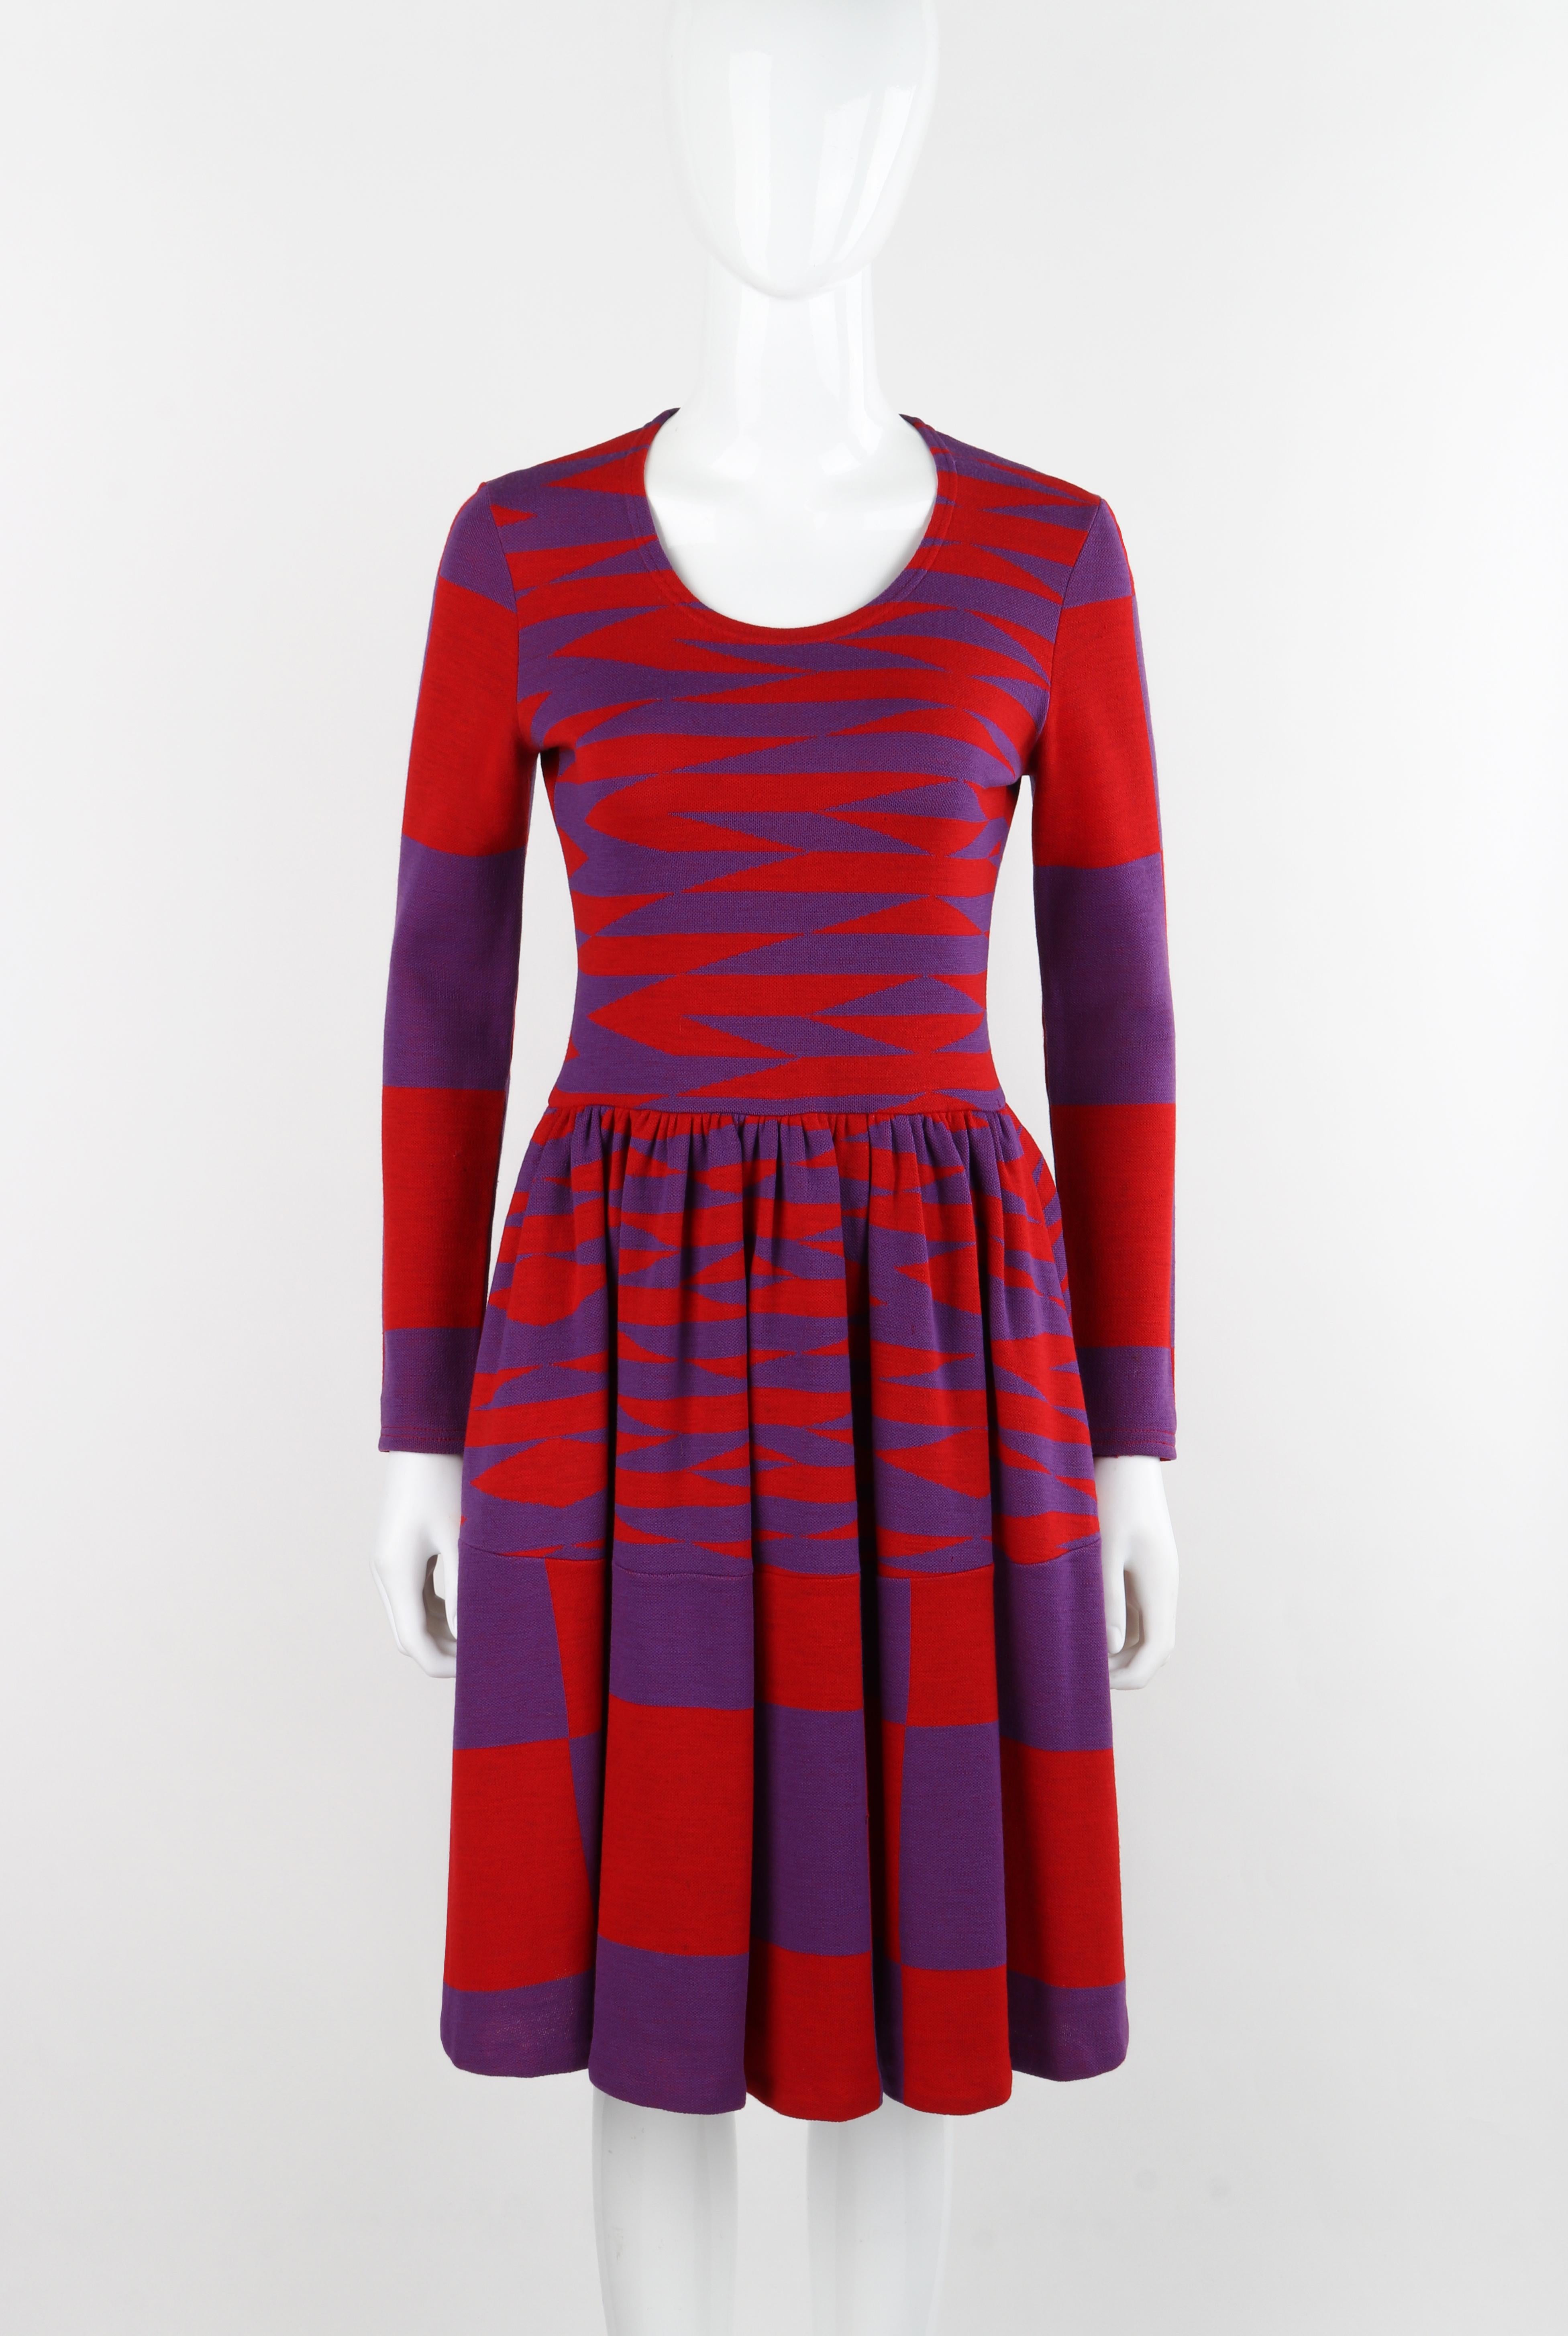 RUDI GERNREICH Harmon Knitwear c.1971 Purple Red Op Art Print Wool Day Dress VTG

Brand / Manufacturer: Rudi Gernreich for Harmon Knitwear
Circa: 1971
Designer: Rudi Gerhreich
Style: Day
Color(s): Red, Purple
Lined: No
Marked Fabric: 100%